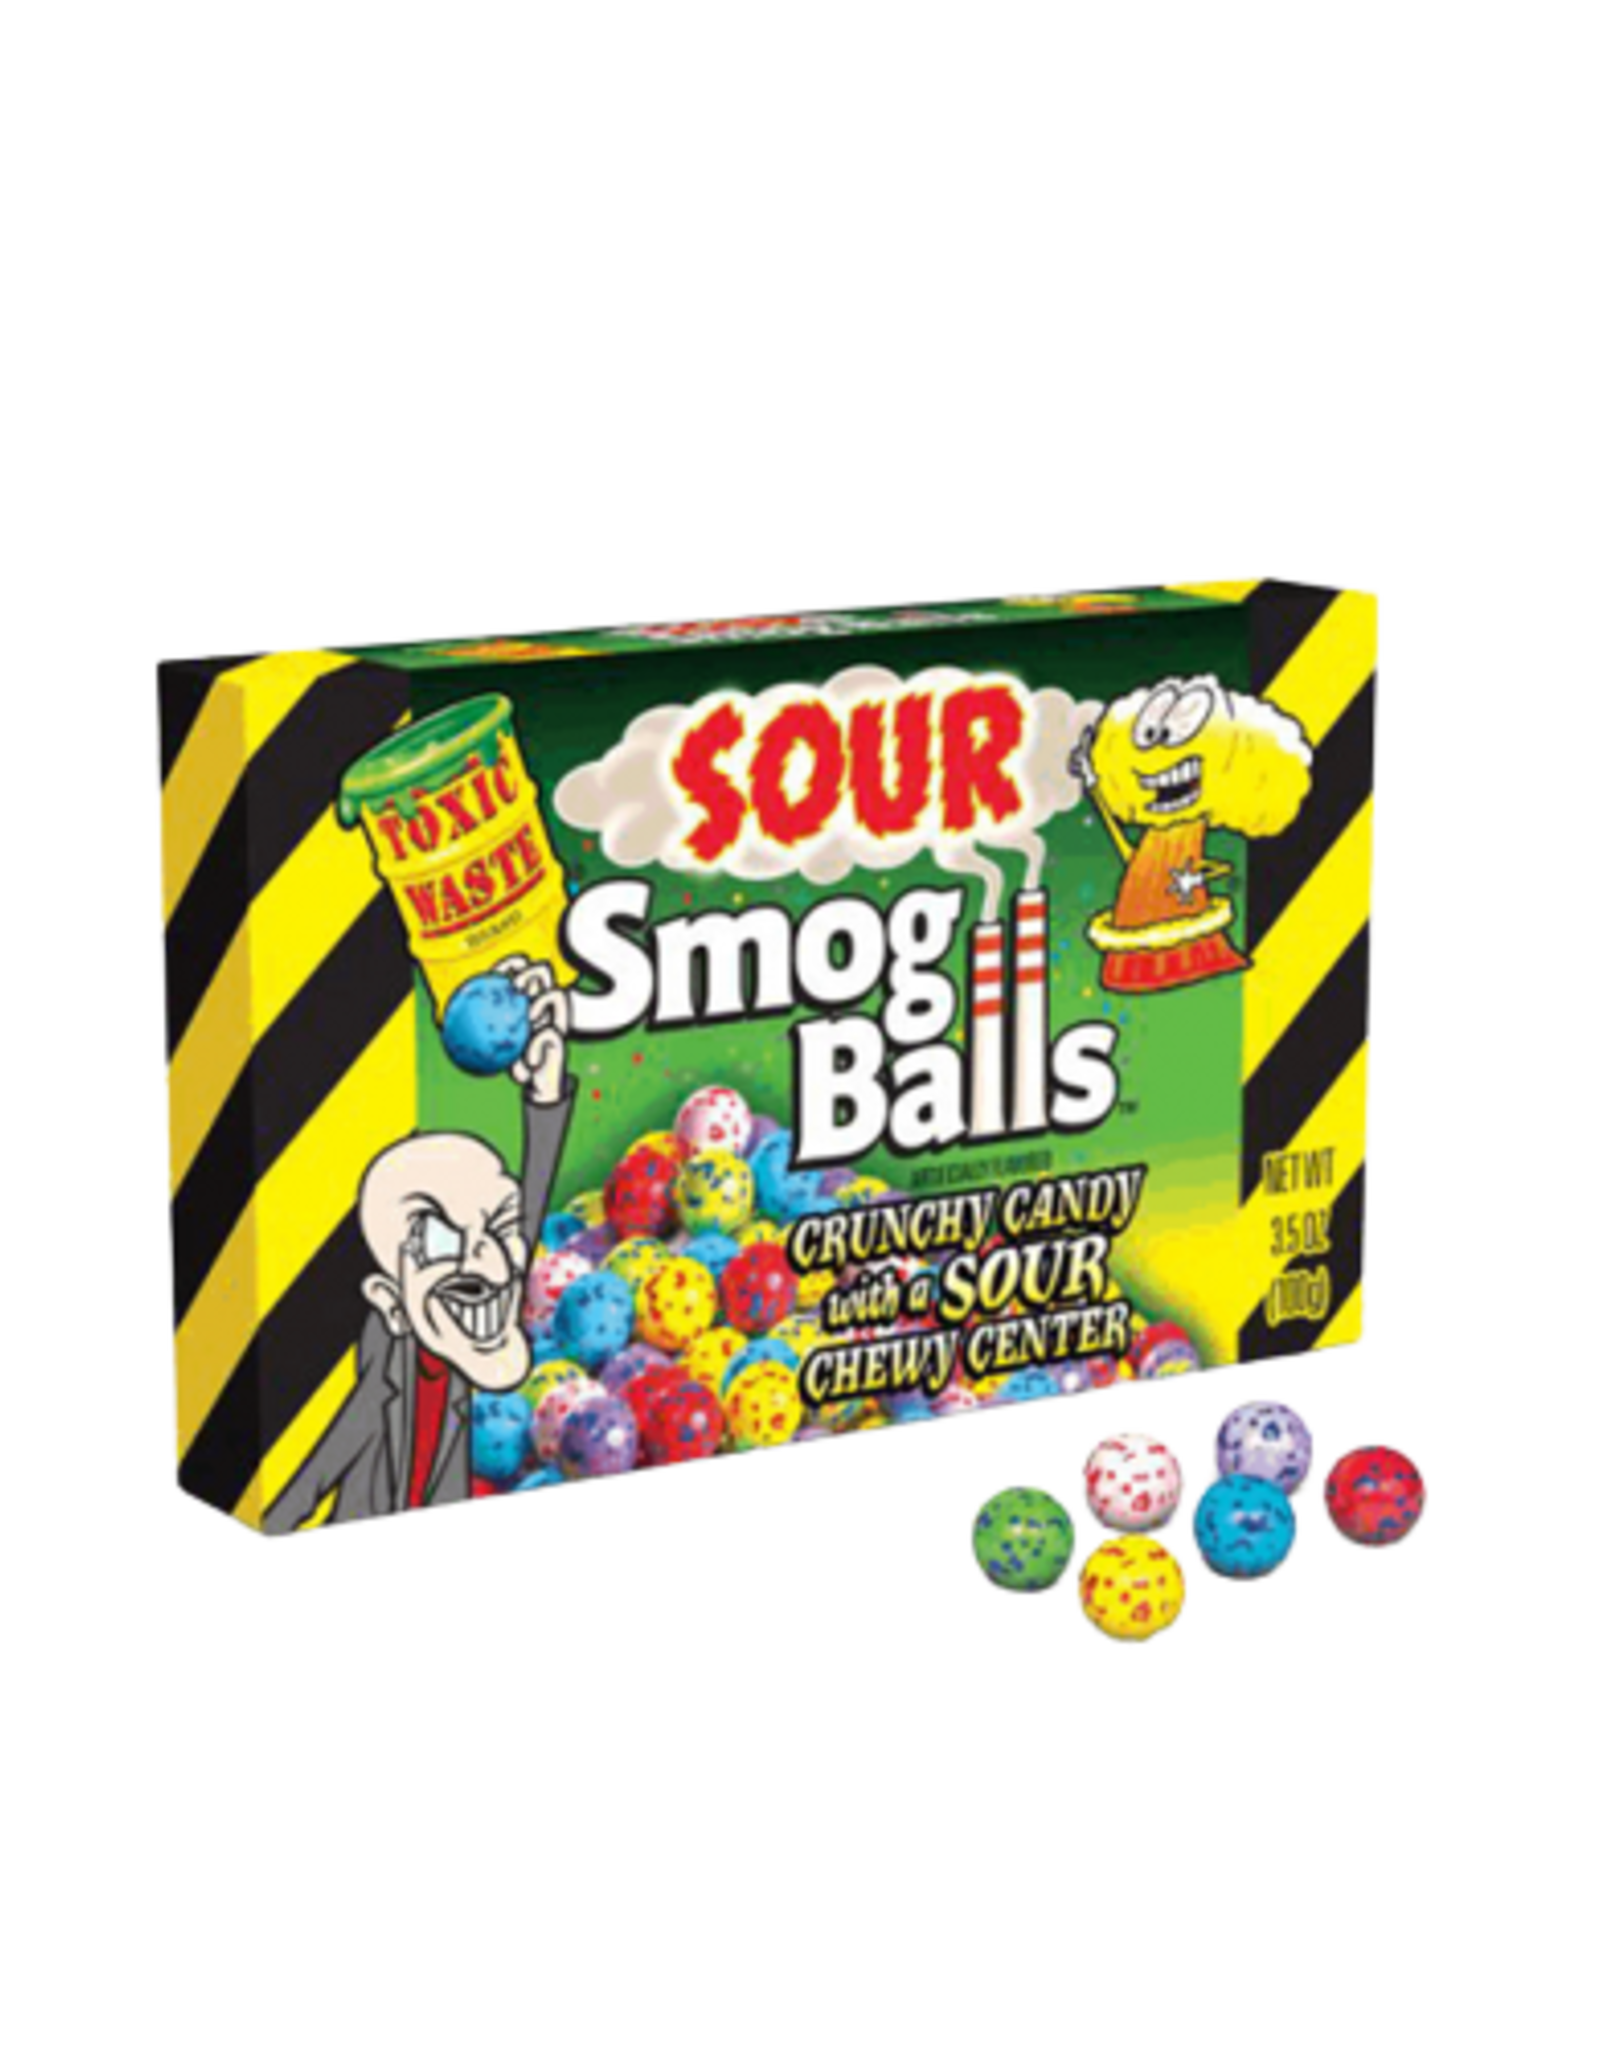 Toxic Waste Smog Balls